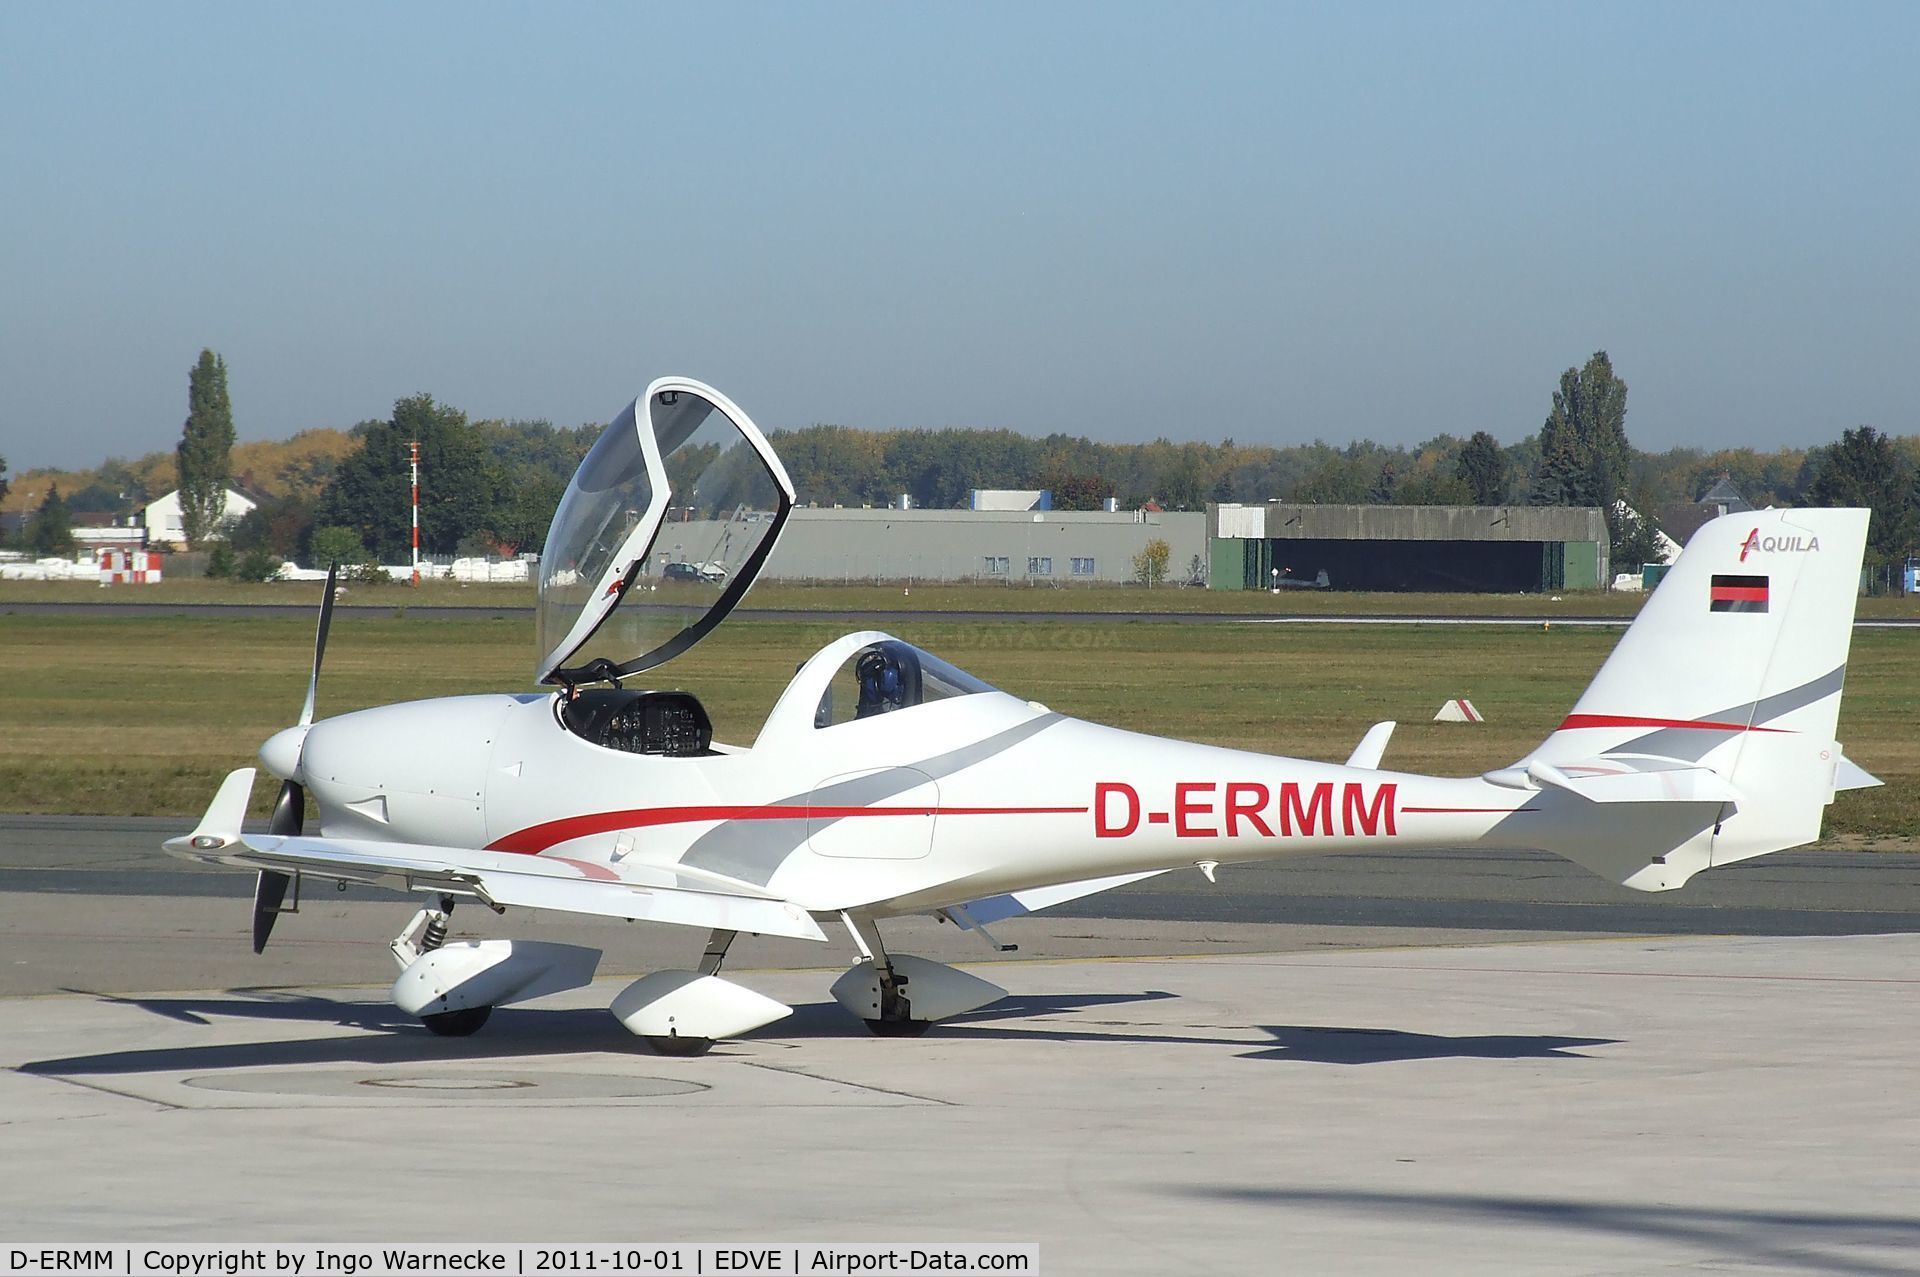 D-ERMM, 2003 Aquila A210 (AT01) C/N AT01-108, Aquila A210 (AT01) at Braunschweig-Waggum airport